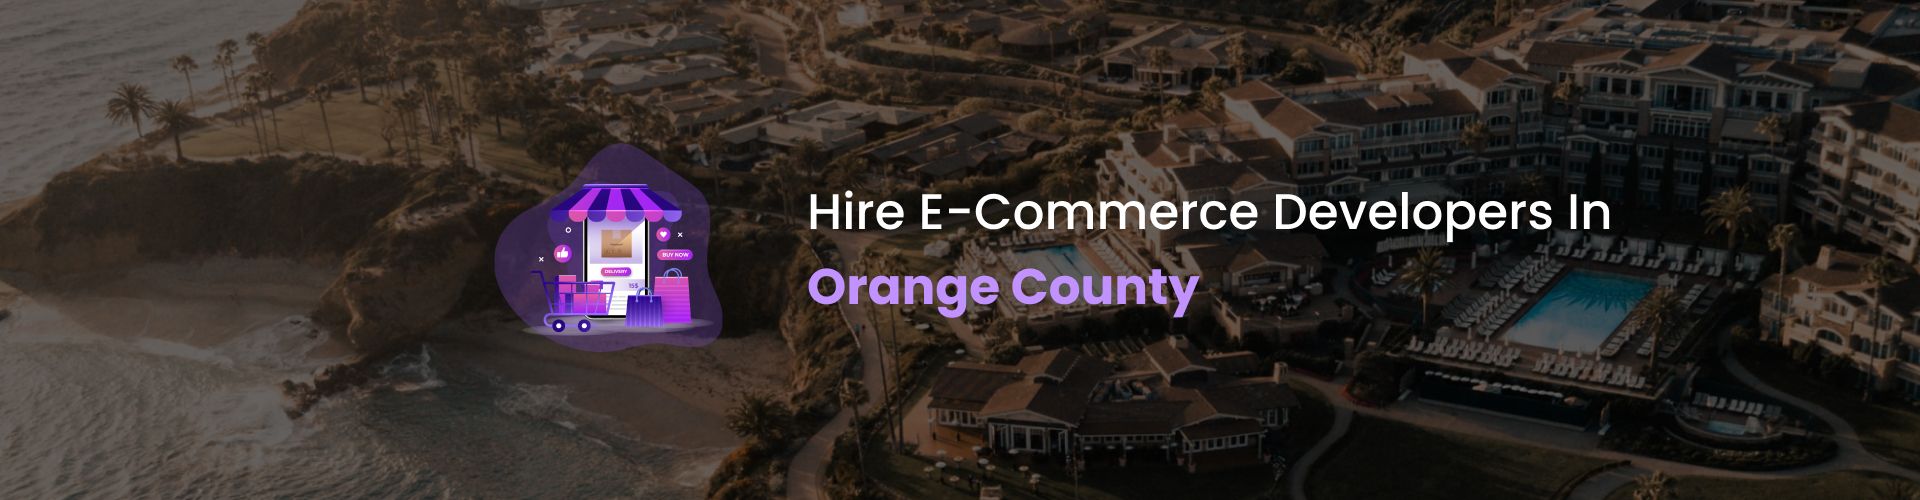 ecommerce development company in orange county